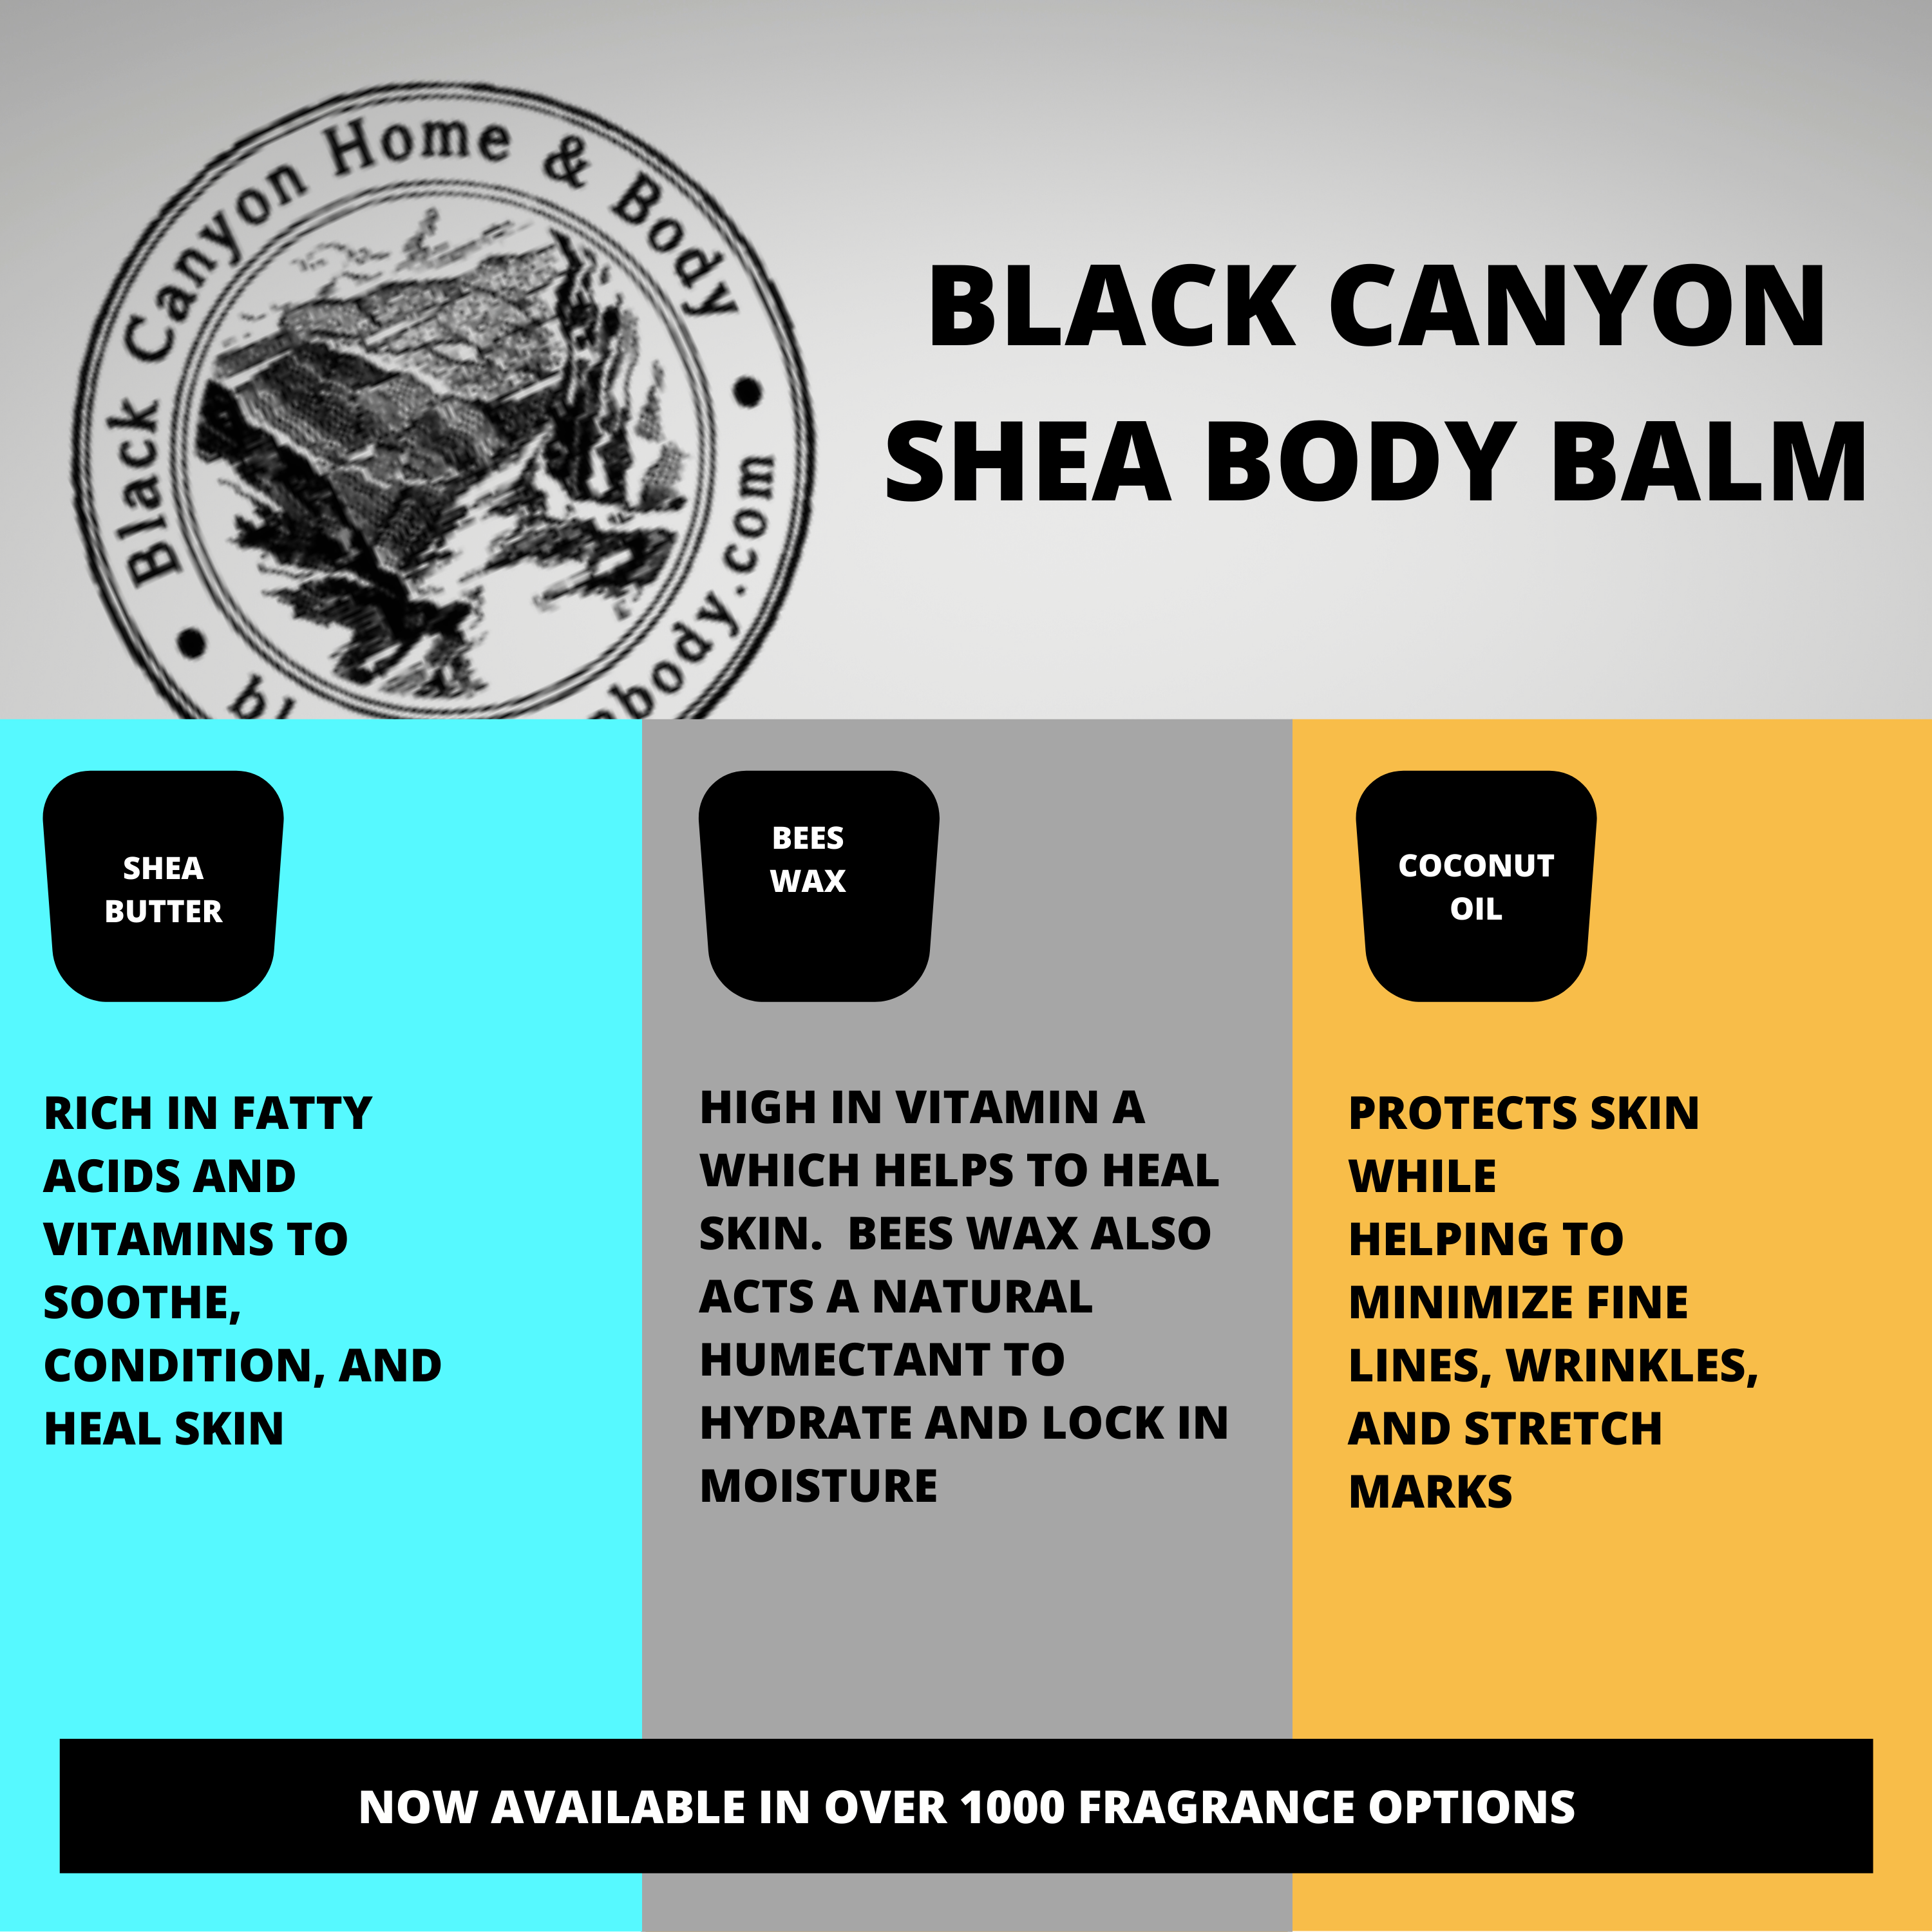 Black Canyon Sour Lemon & Vanilla Scented Natural Body Balm with Shea